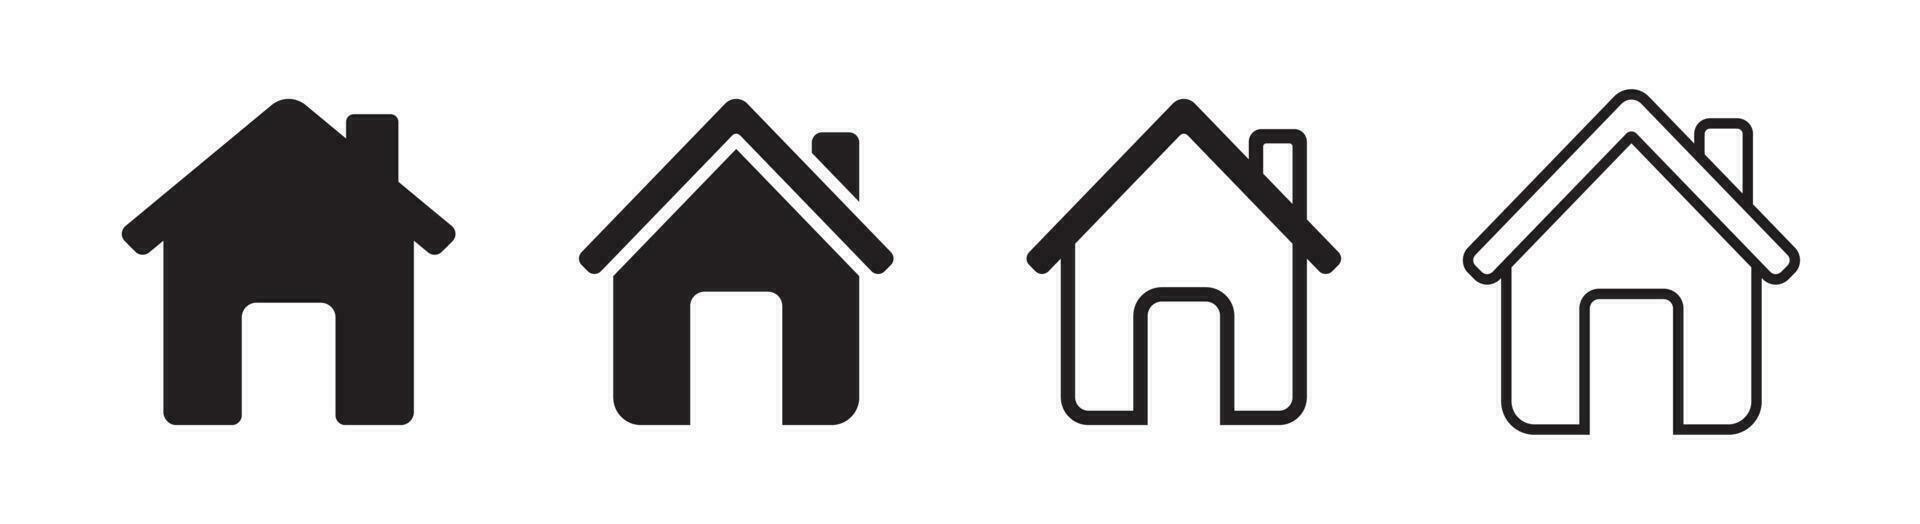 conjunto do 4 casa ou casa ícone plano glifo estilo e delineado editável AVC, clipart Projeto modelo vetor